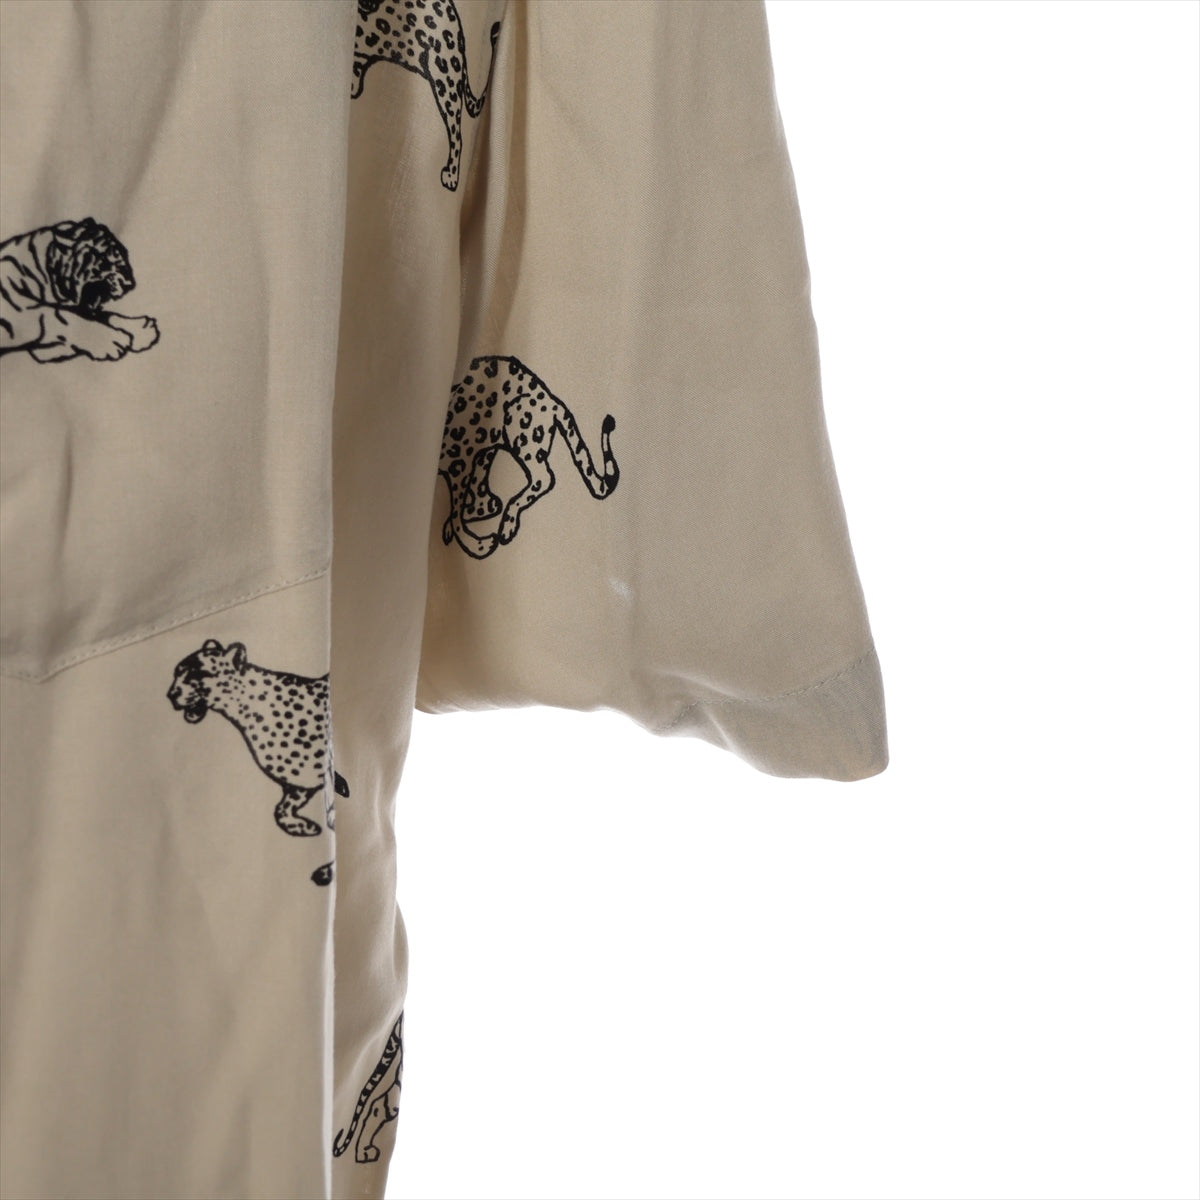 CELINE Eddie period Rayon Shirt 39 Men's Beige  Animal pattern Hawaiian loose shirt 2C730362Q